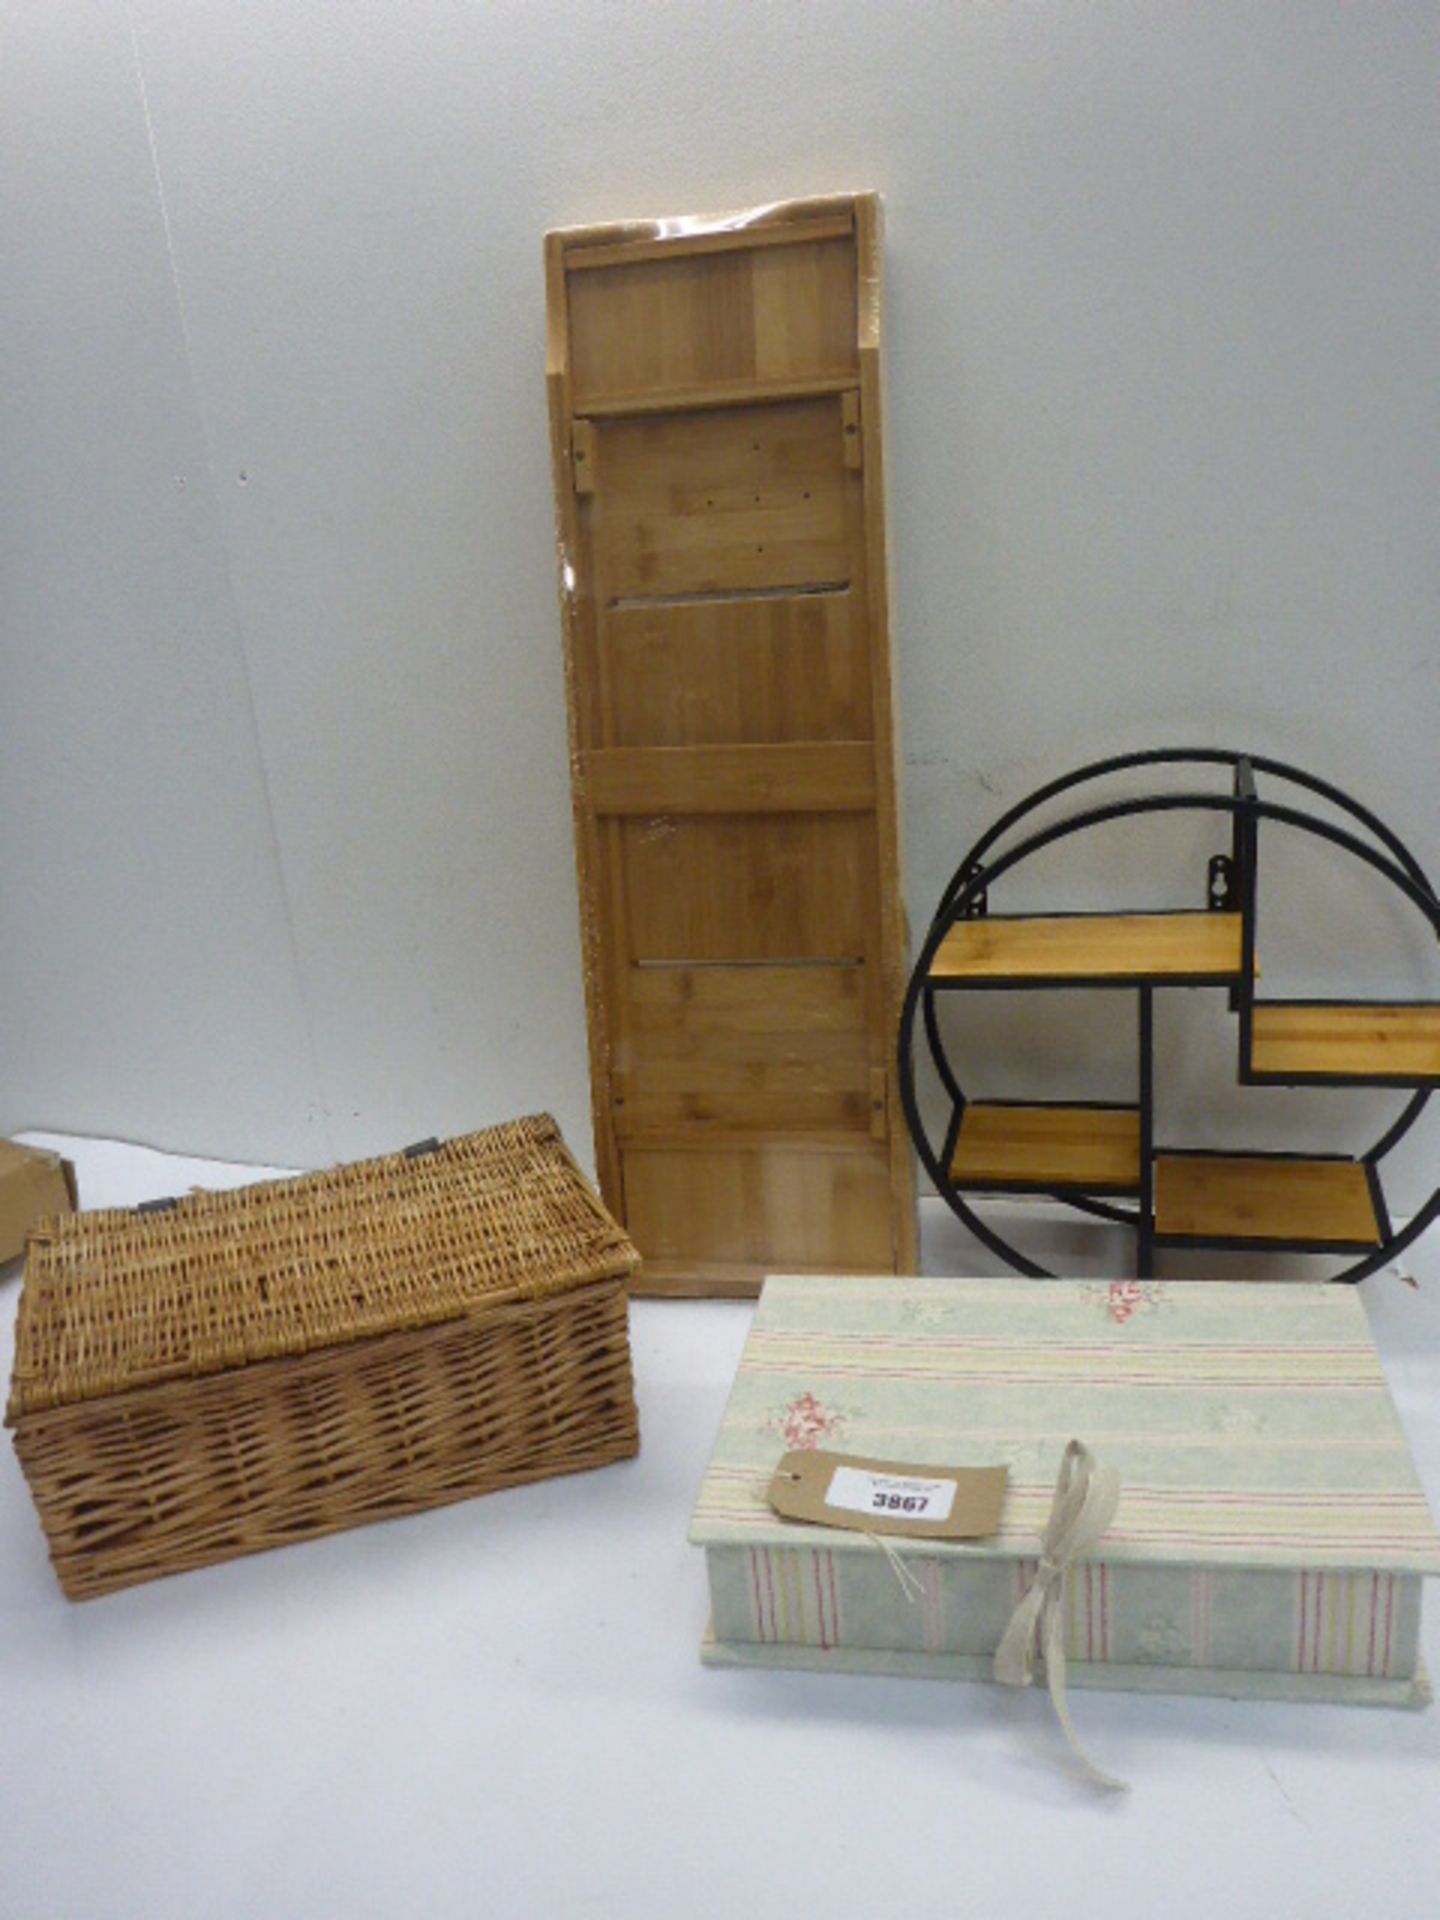 Bamboo bath caddy, metal and wood display shelf, wicker basket and filing box